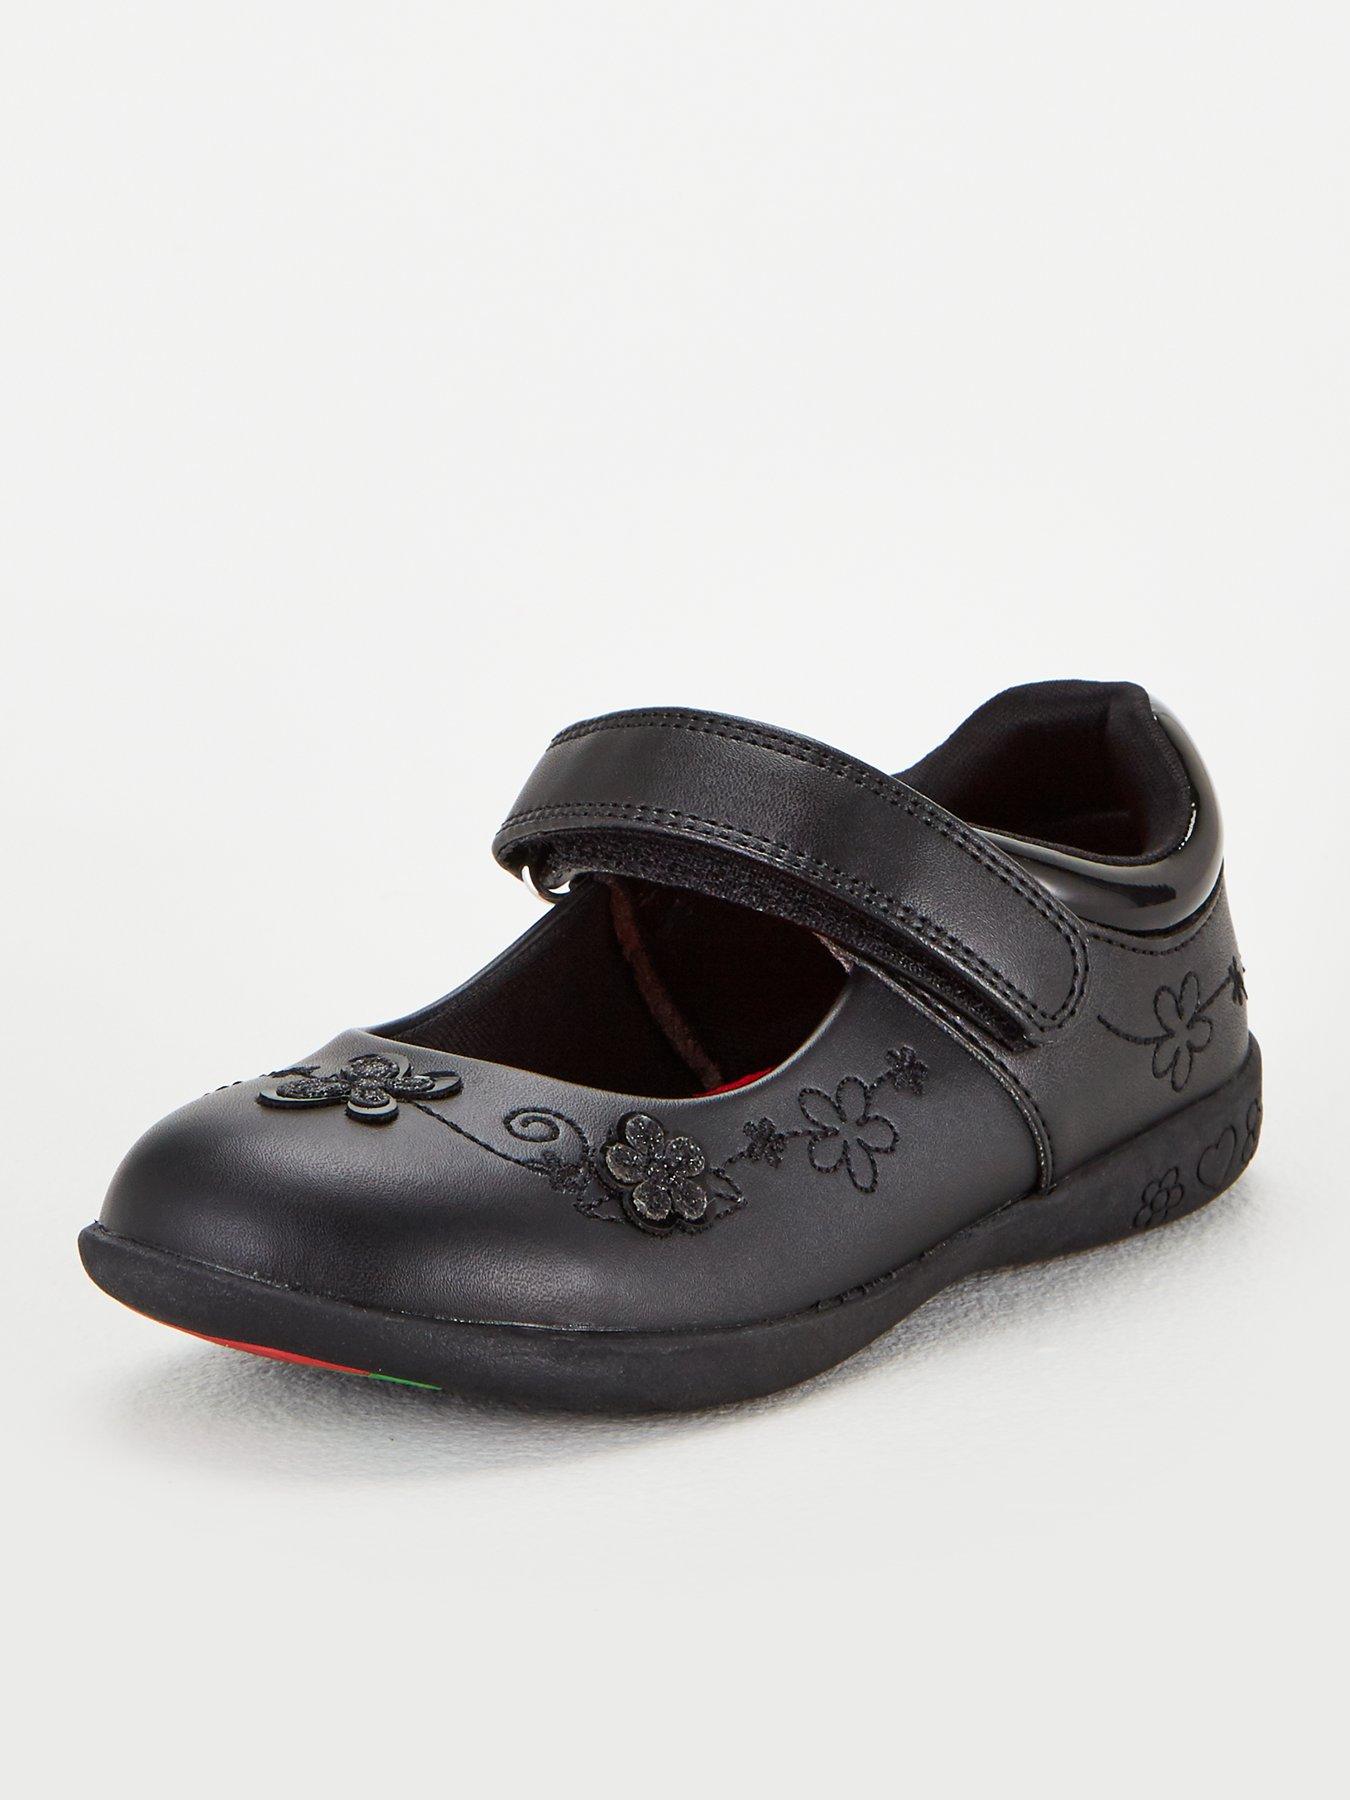 soft leather baby shoes ireland